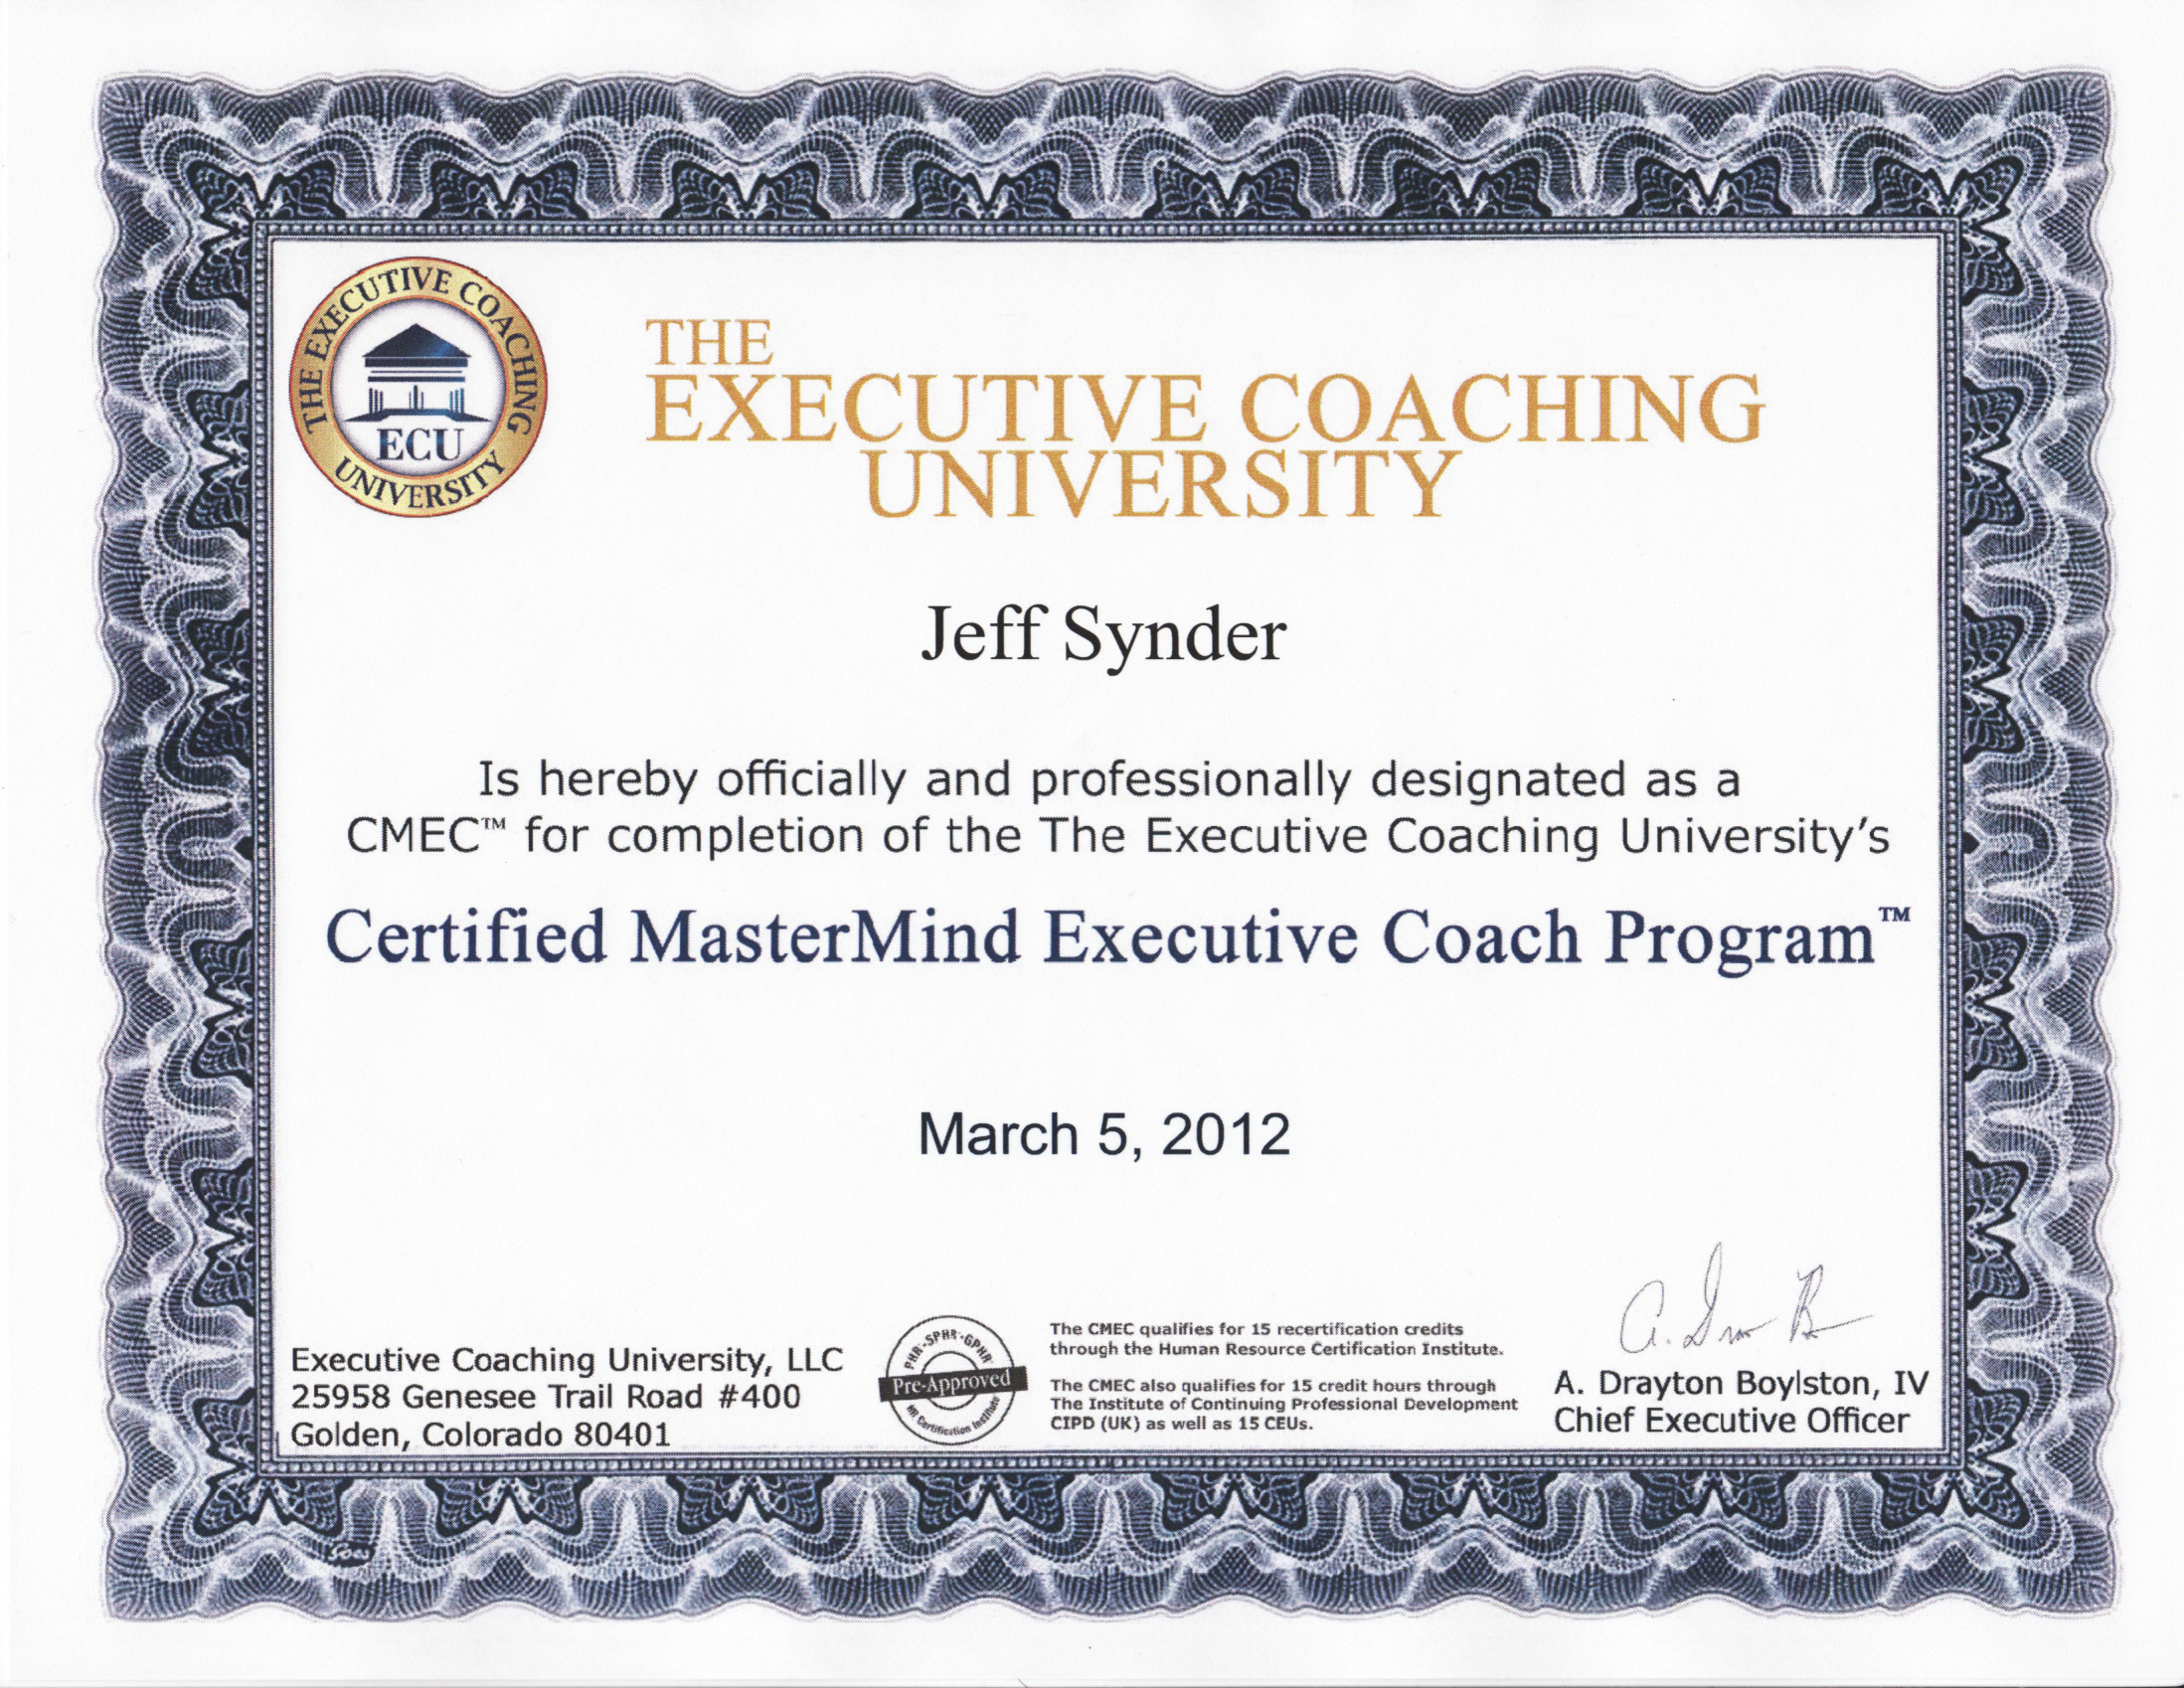 Exec Coaching Univ Certificate JPG 200.jpg